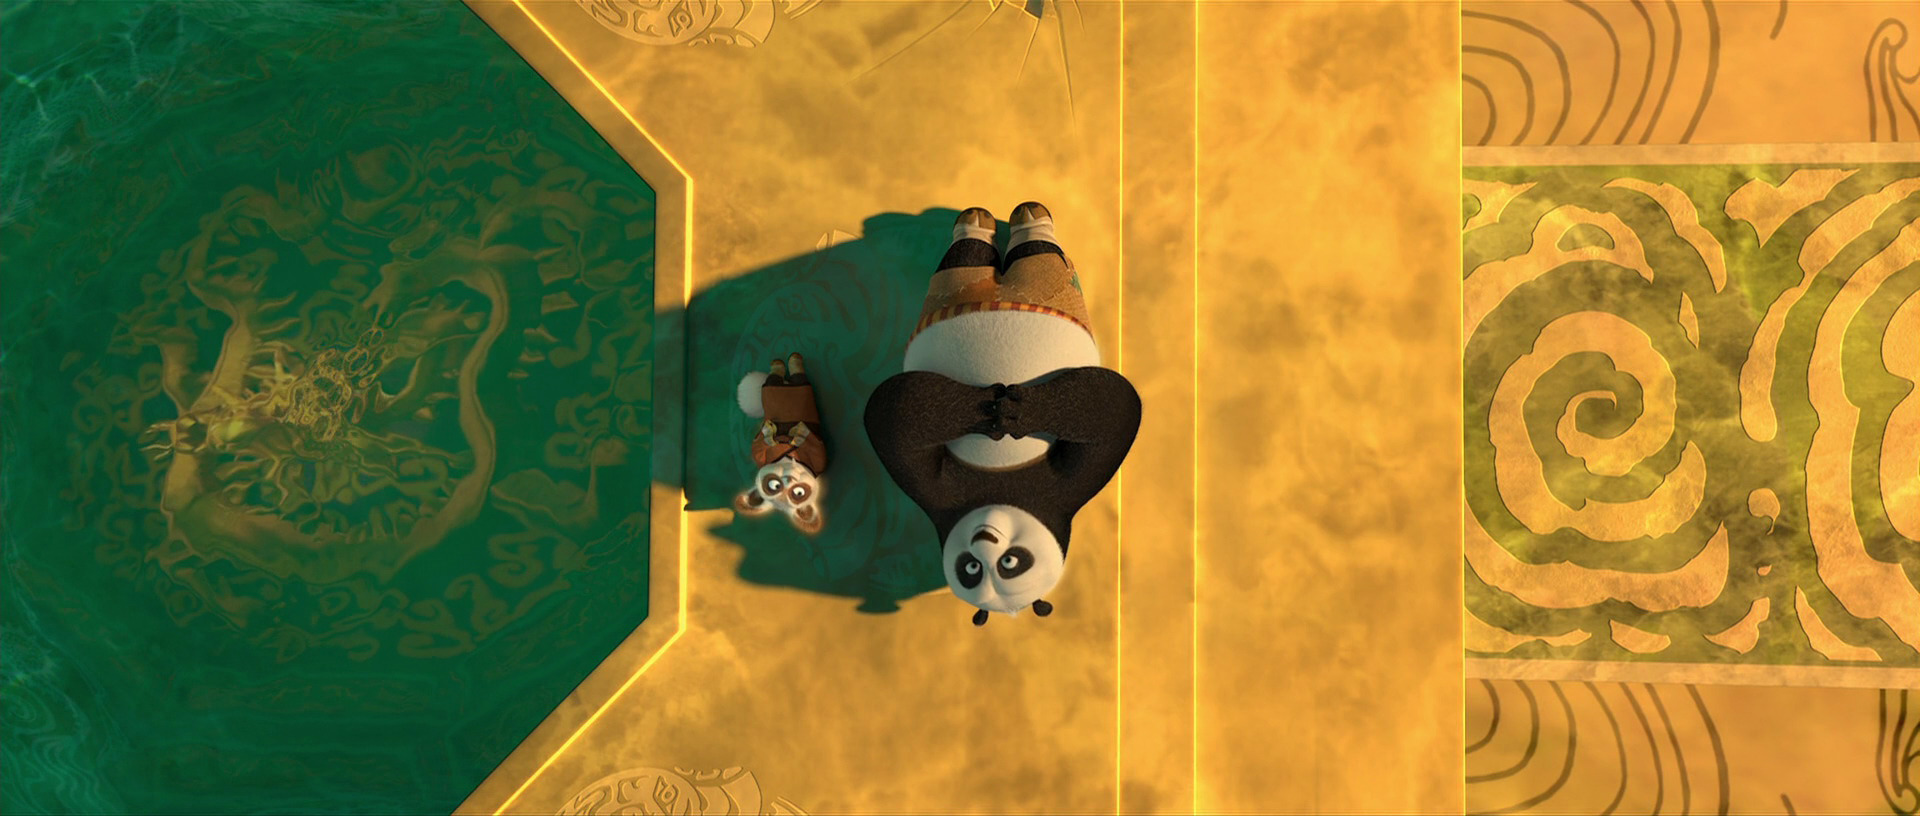 Po and Shifu at peace